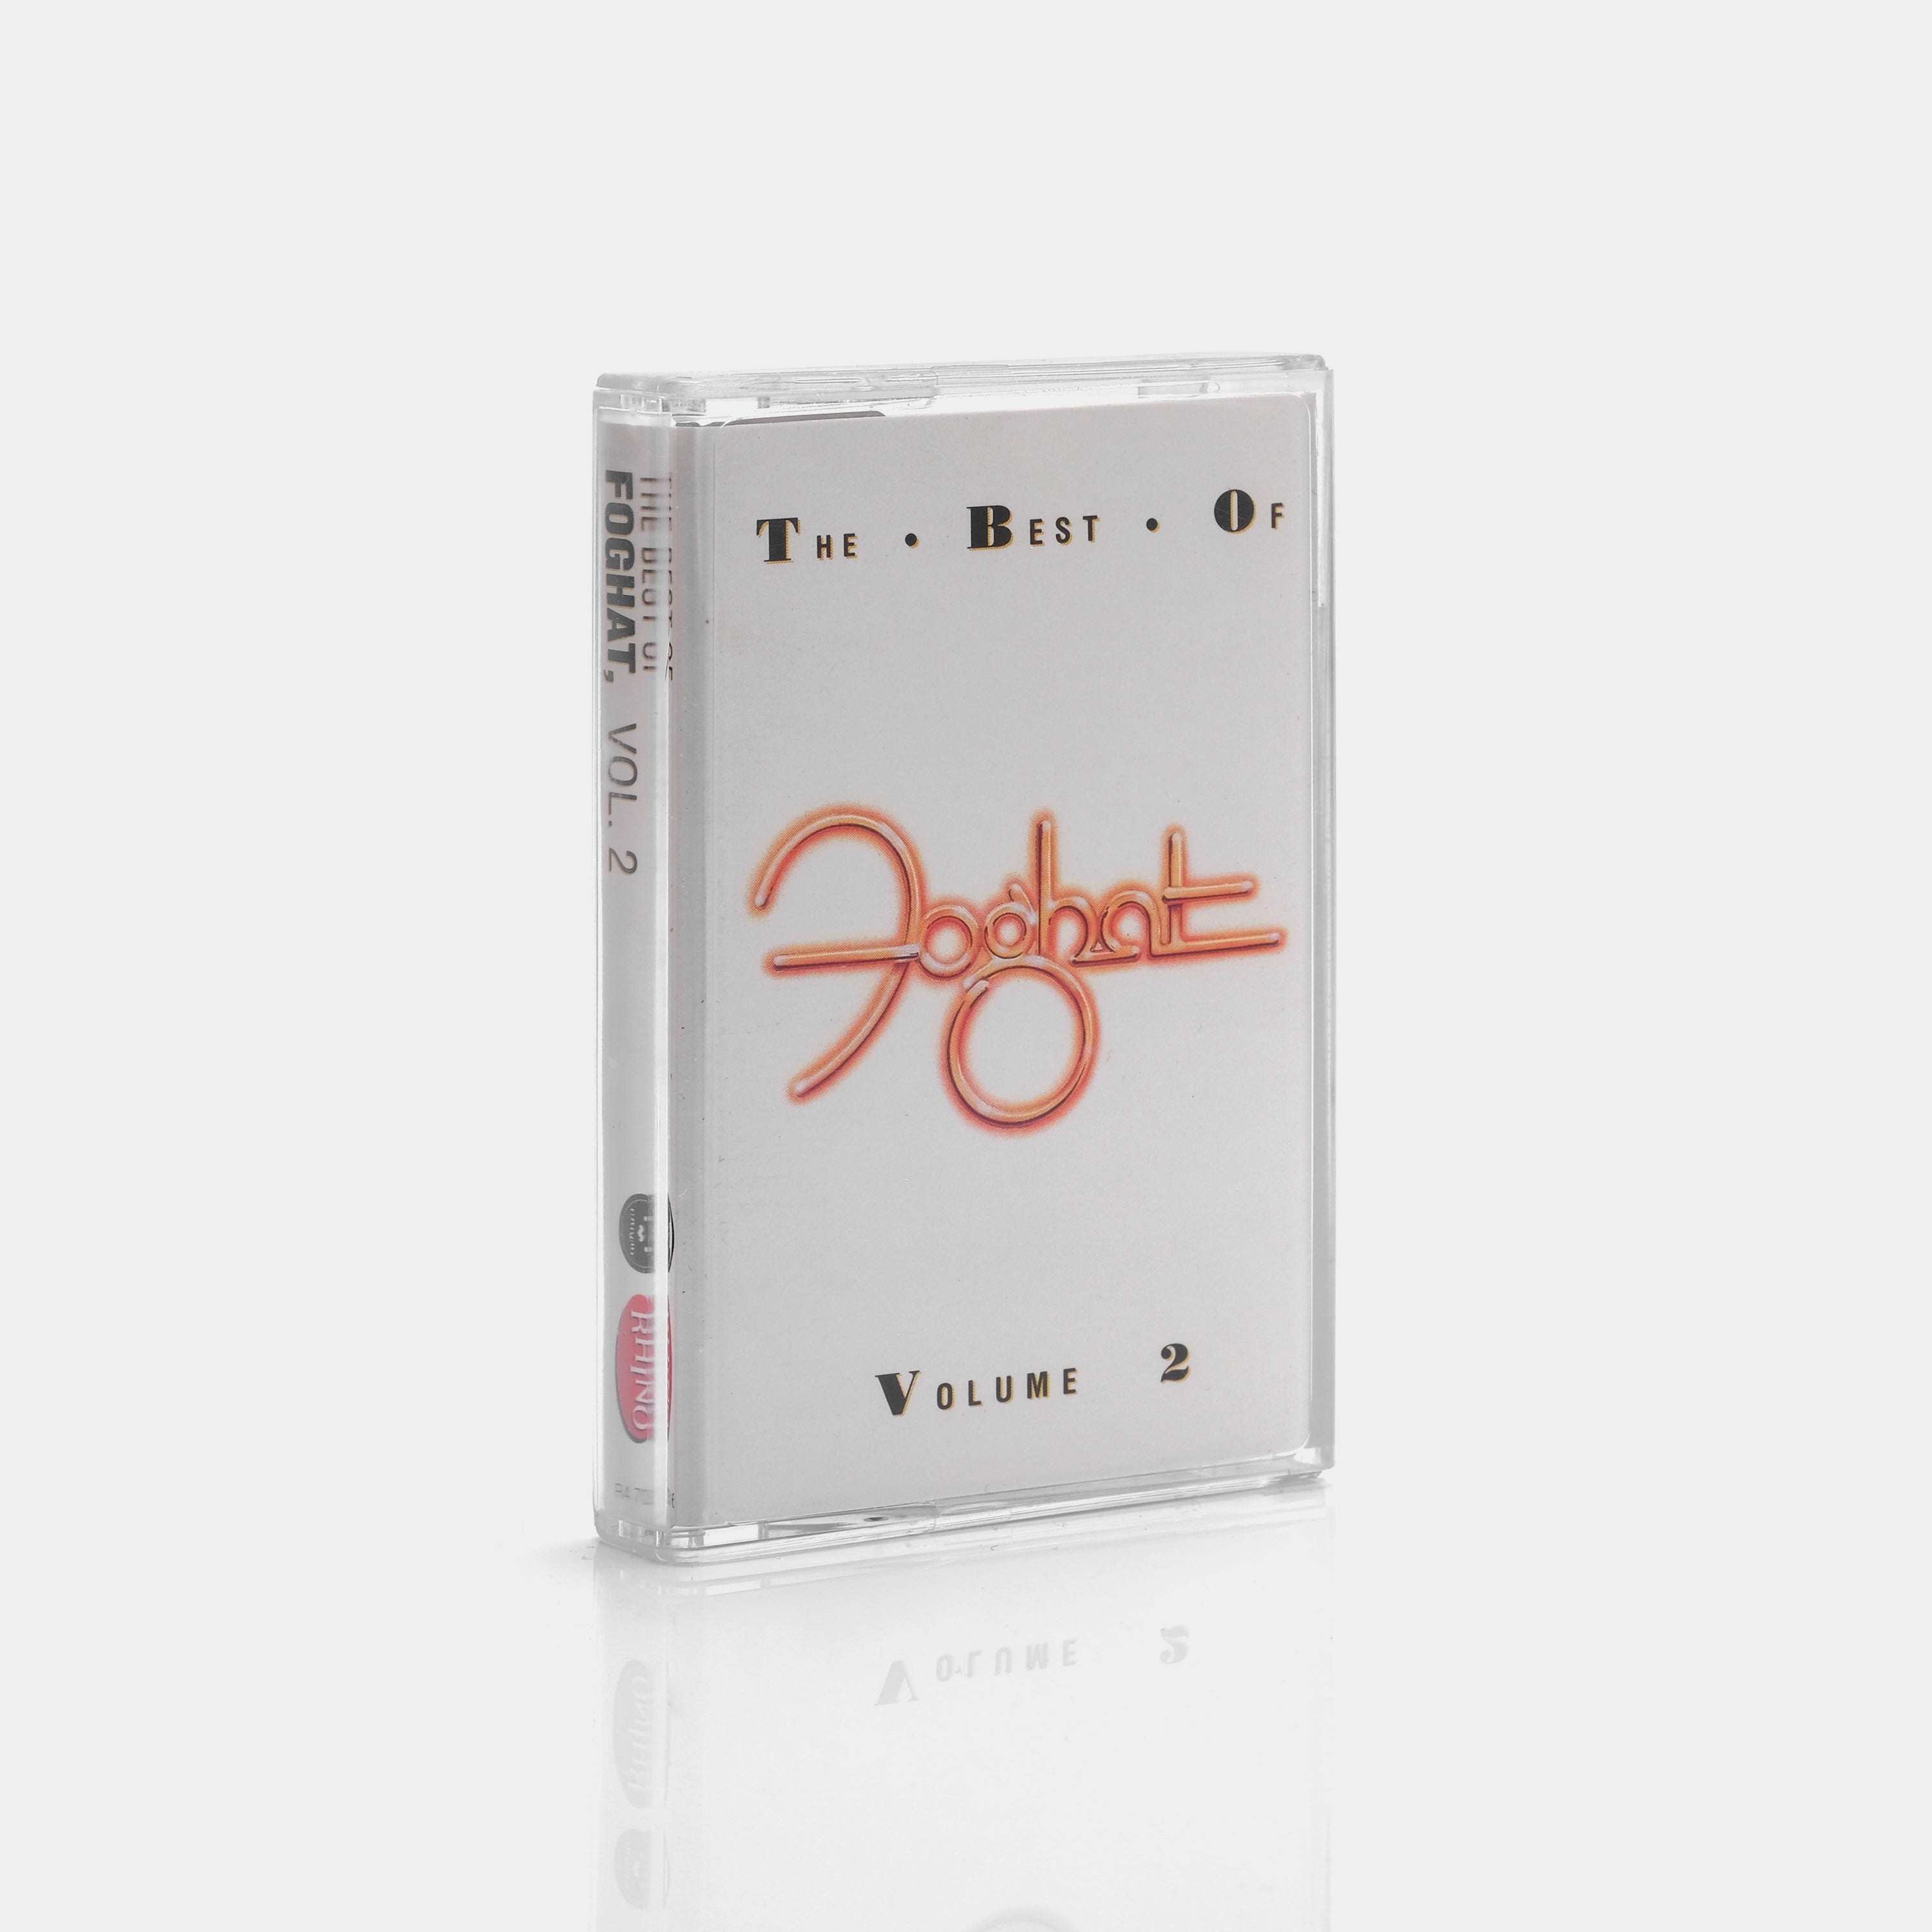 Foghat - The Best of Foghat, Vol. 2 Cassette Tape